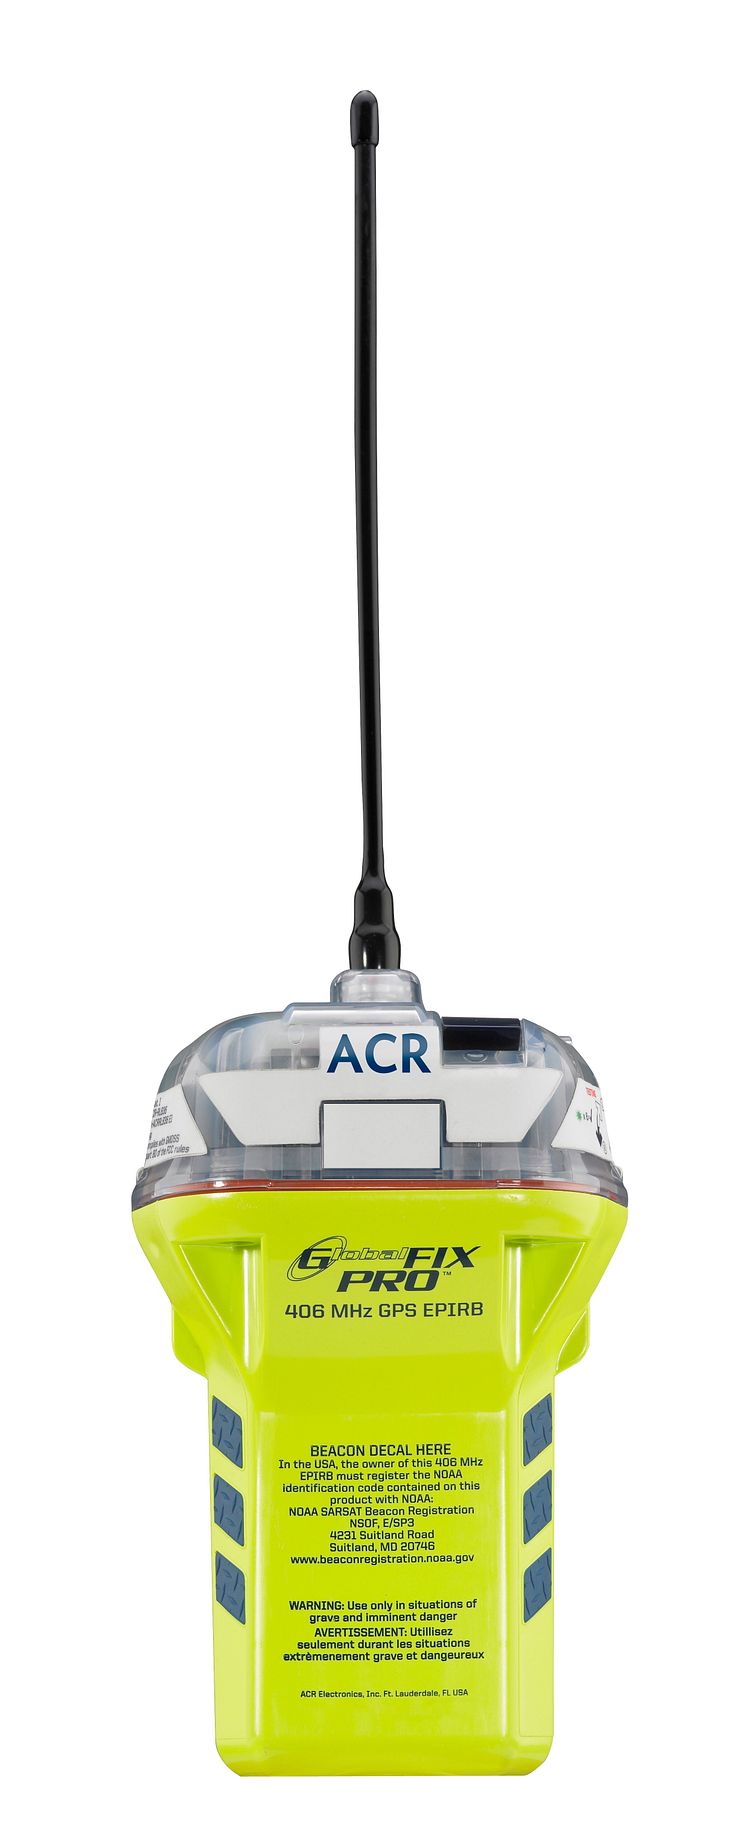 Hi-res image - ACR Electronics - GlobalFix PRO EPIRB